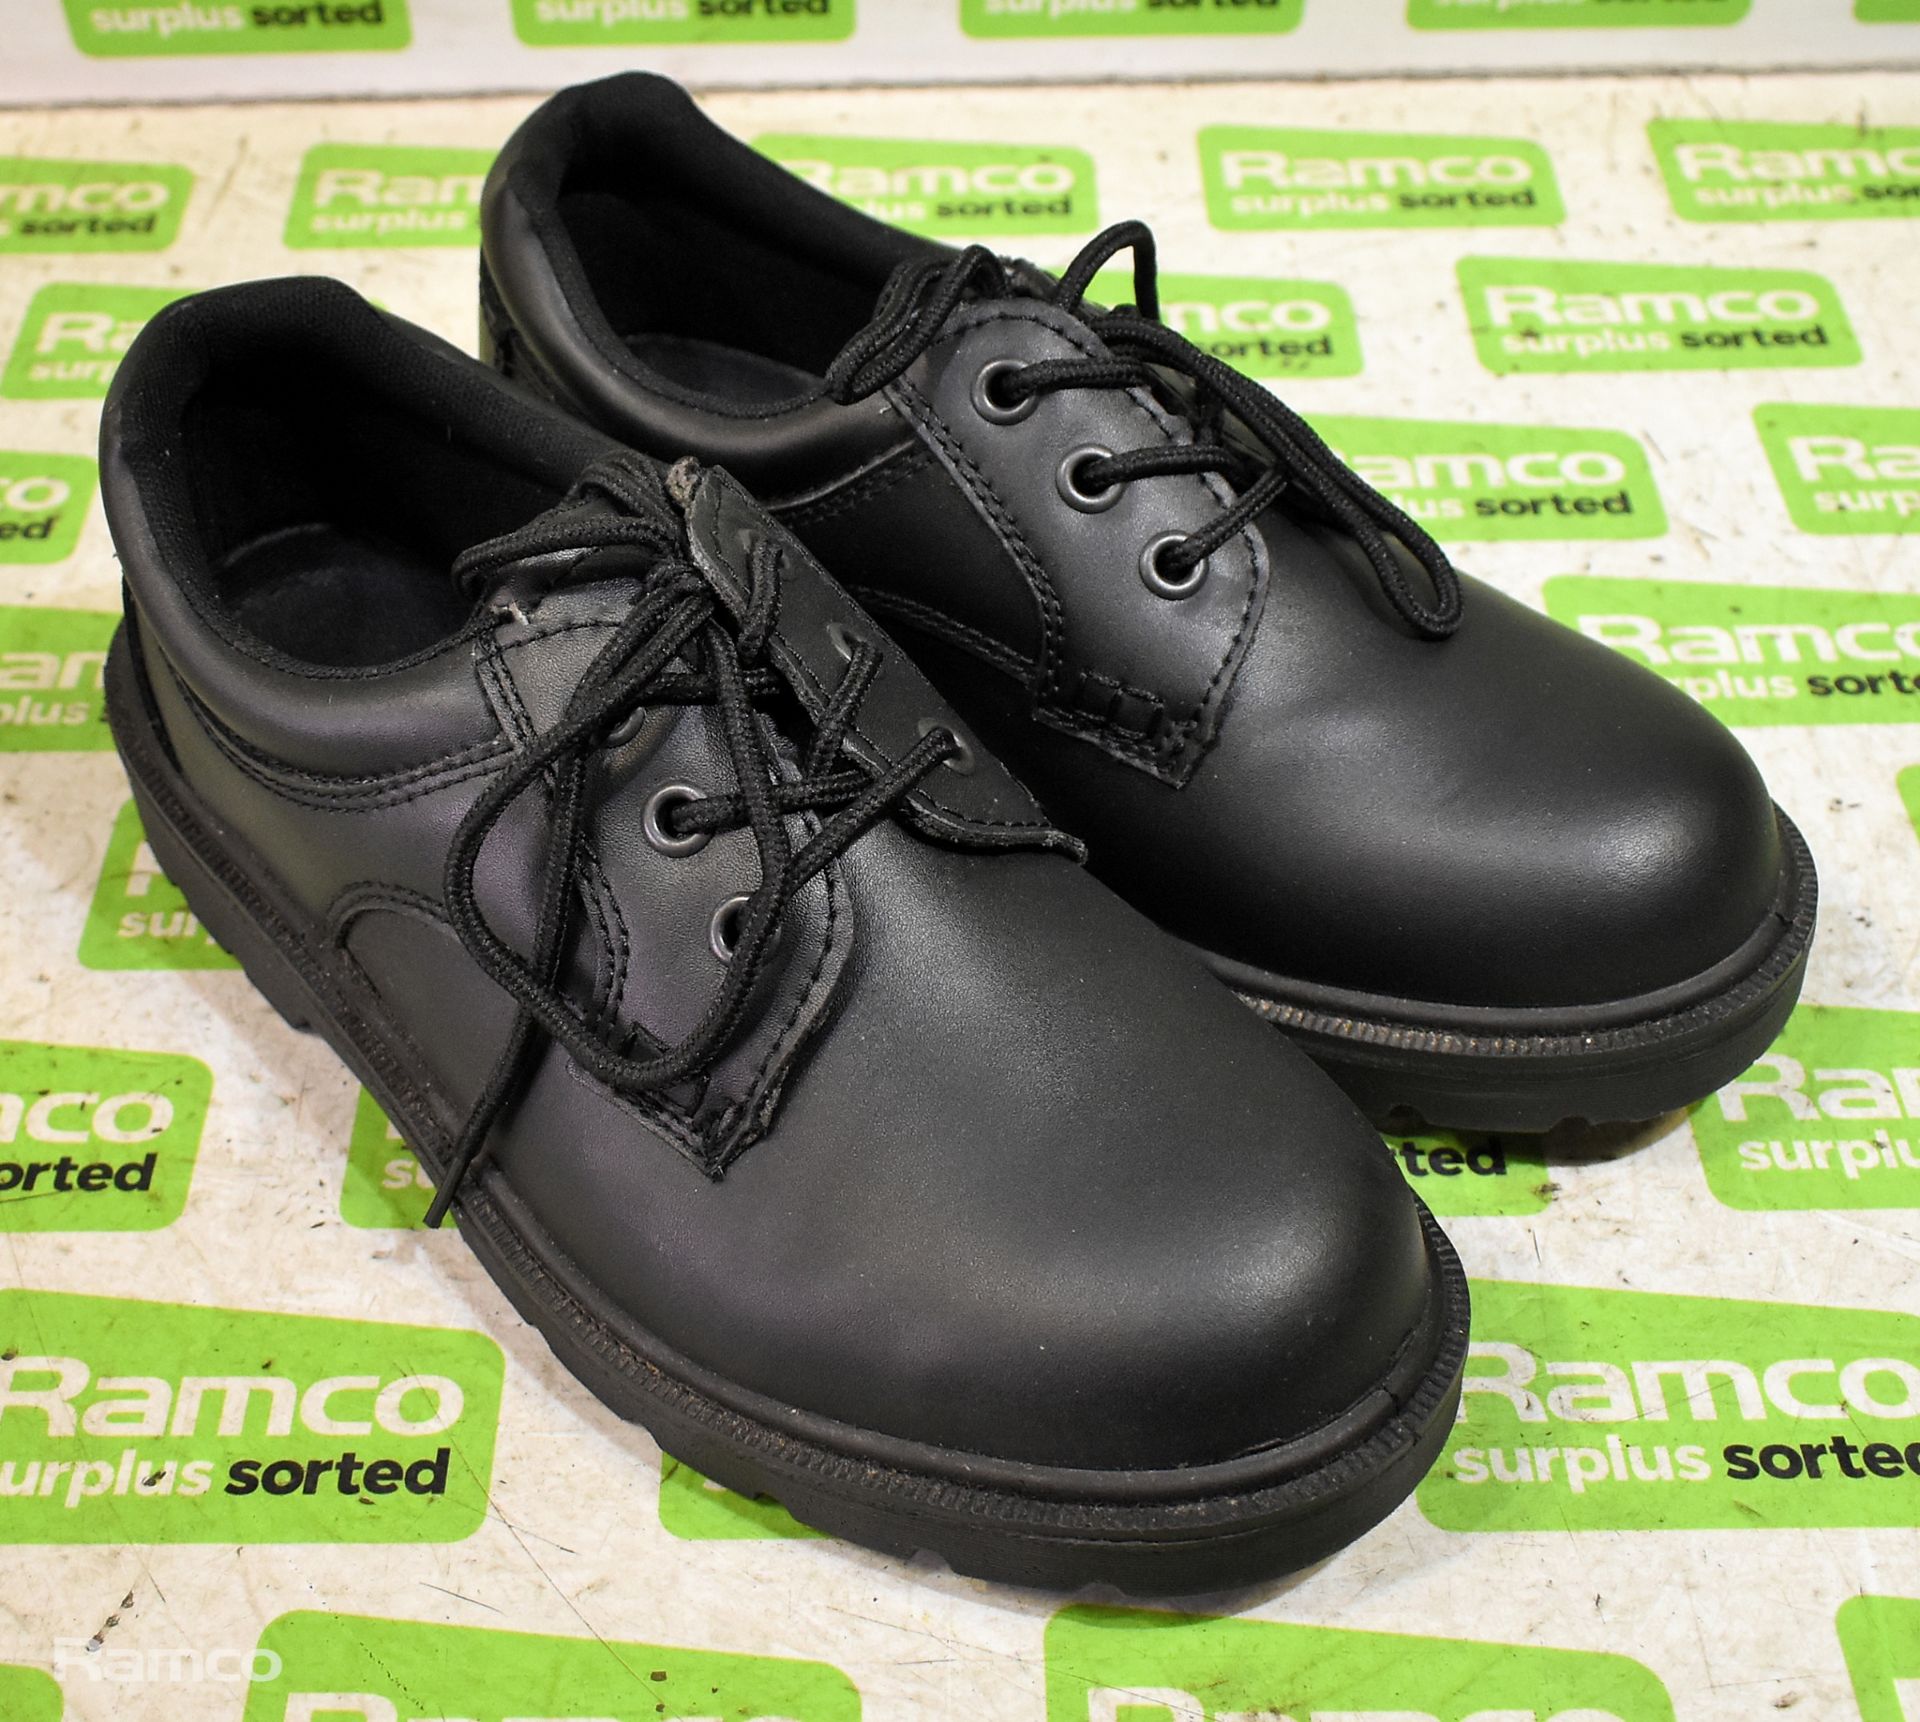 Amblers black safety shoes - size 4, Amblers black safety shoes - size 6, 2x pairs of Amblers black - Image 11 of 13